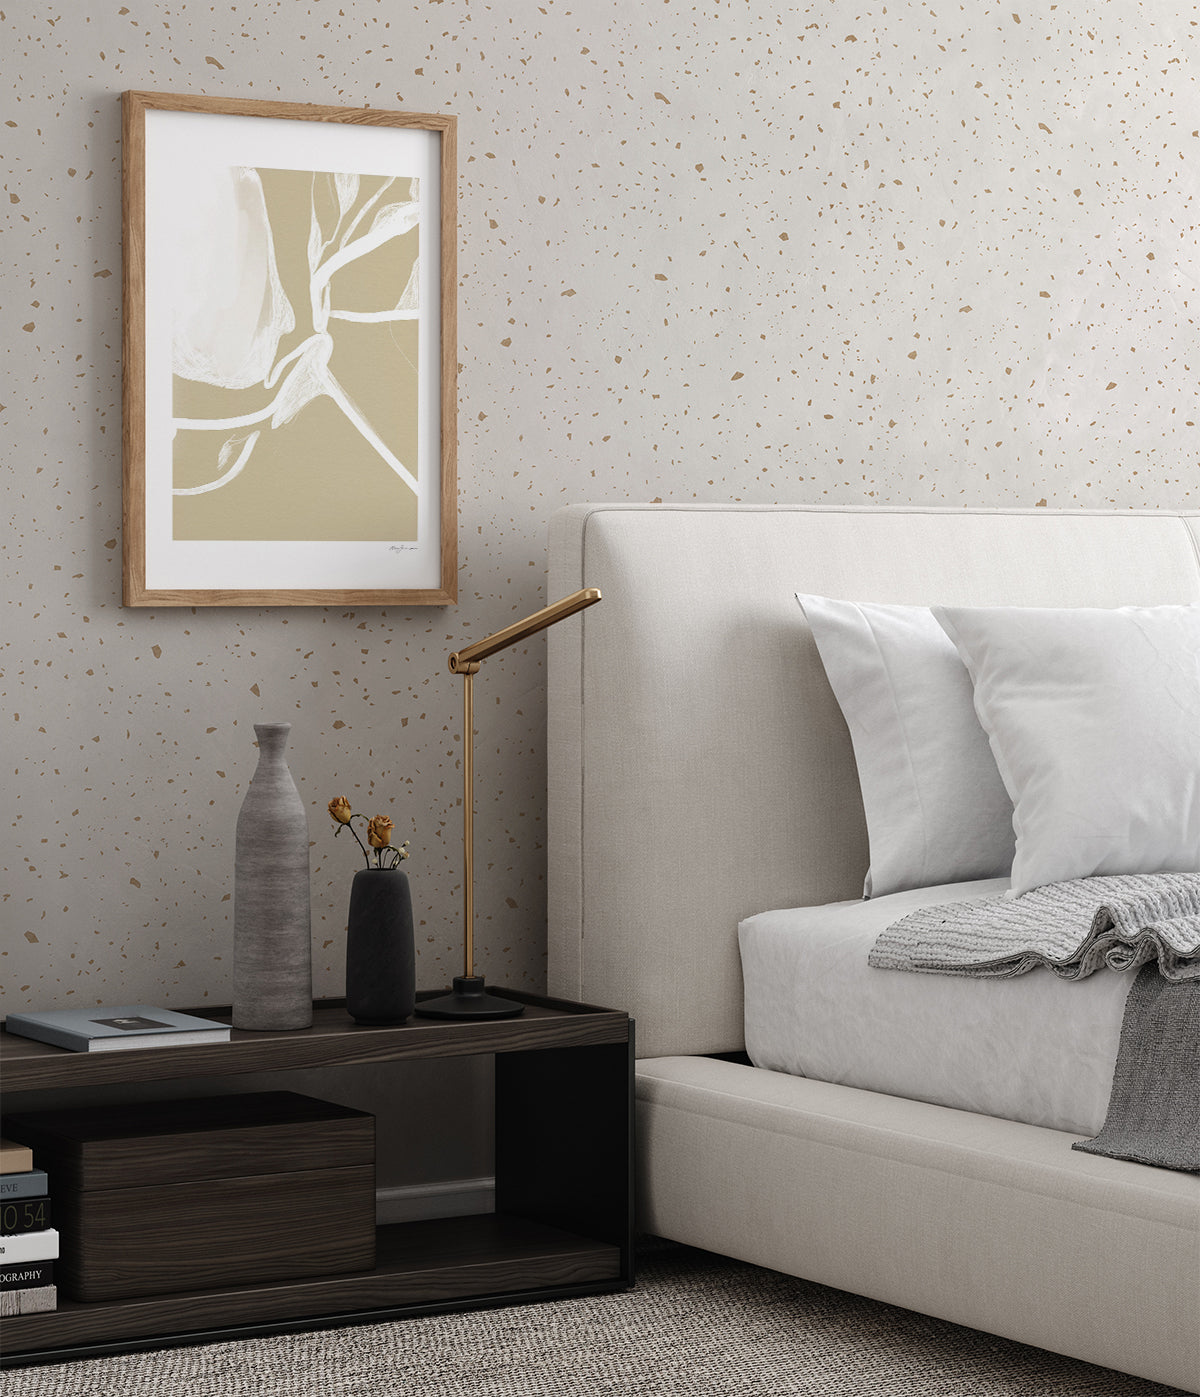 Confetti Speckles Wallpaper in Bedroom